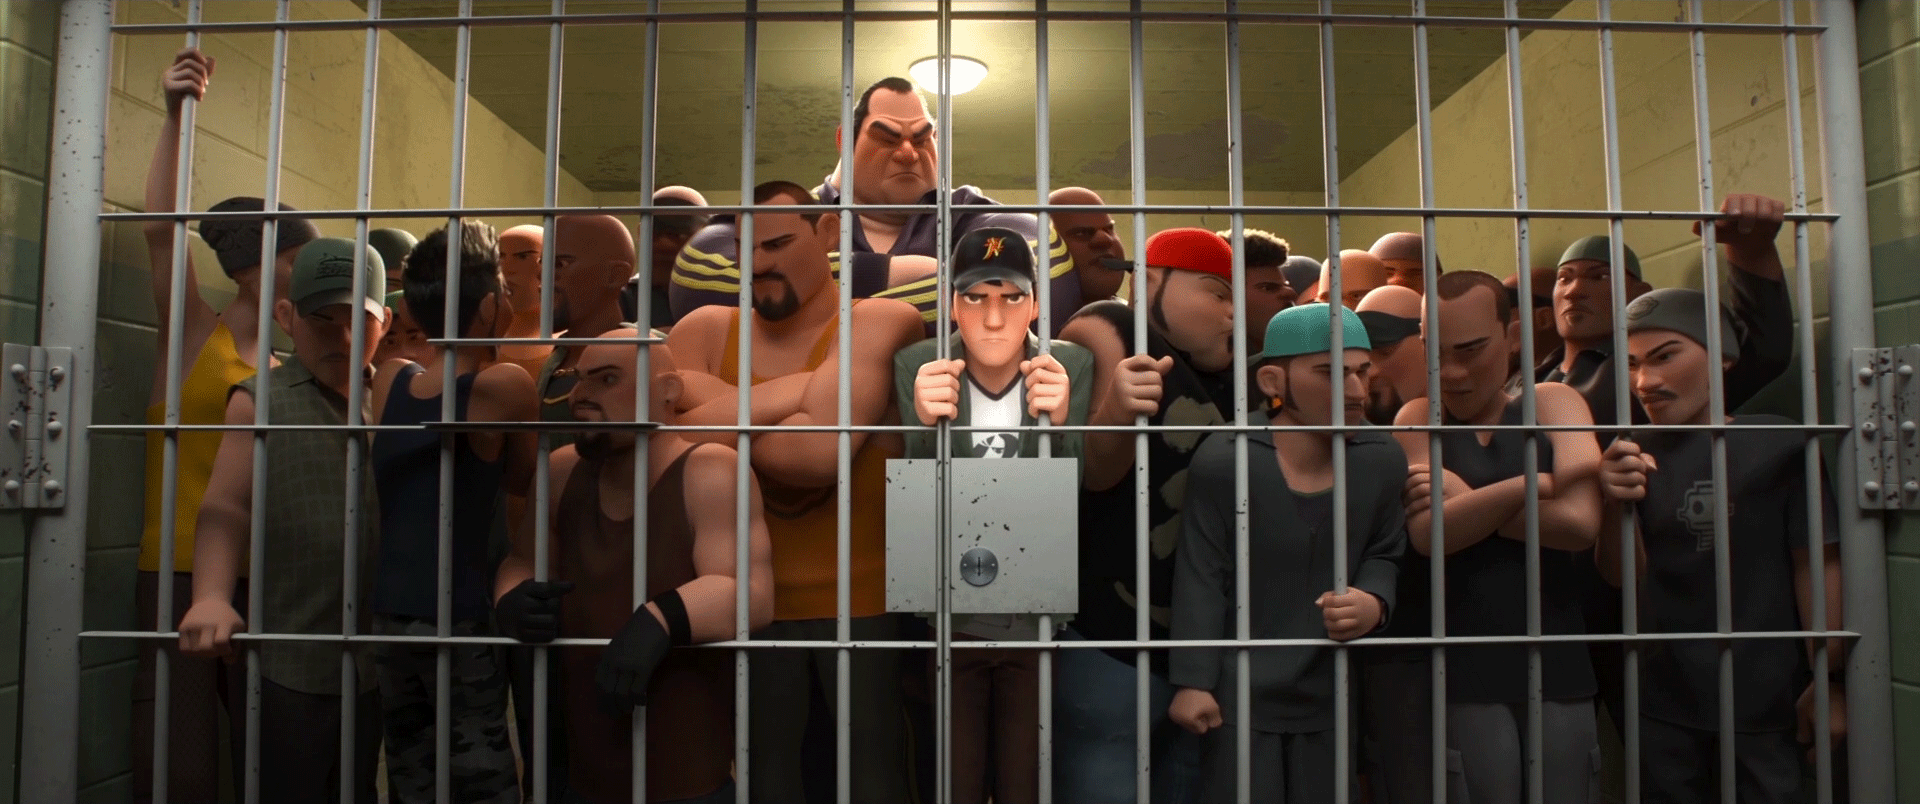 Prison gif